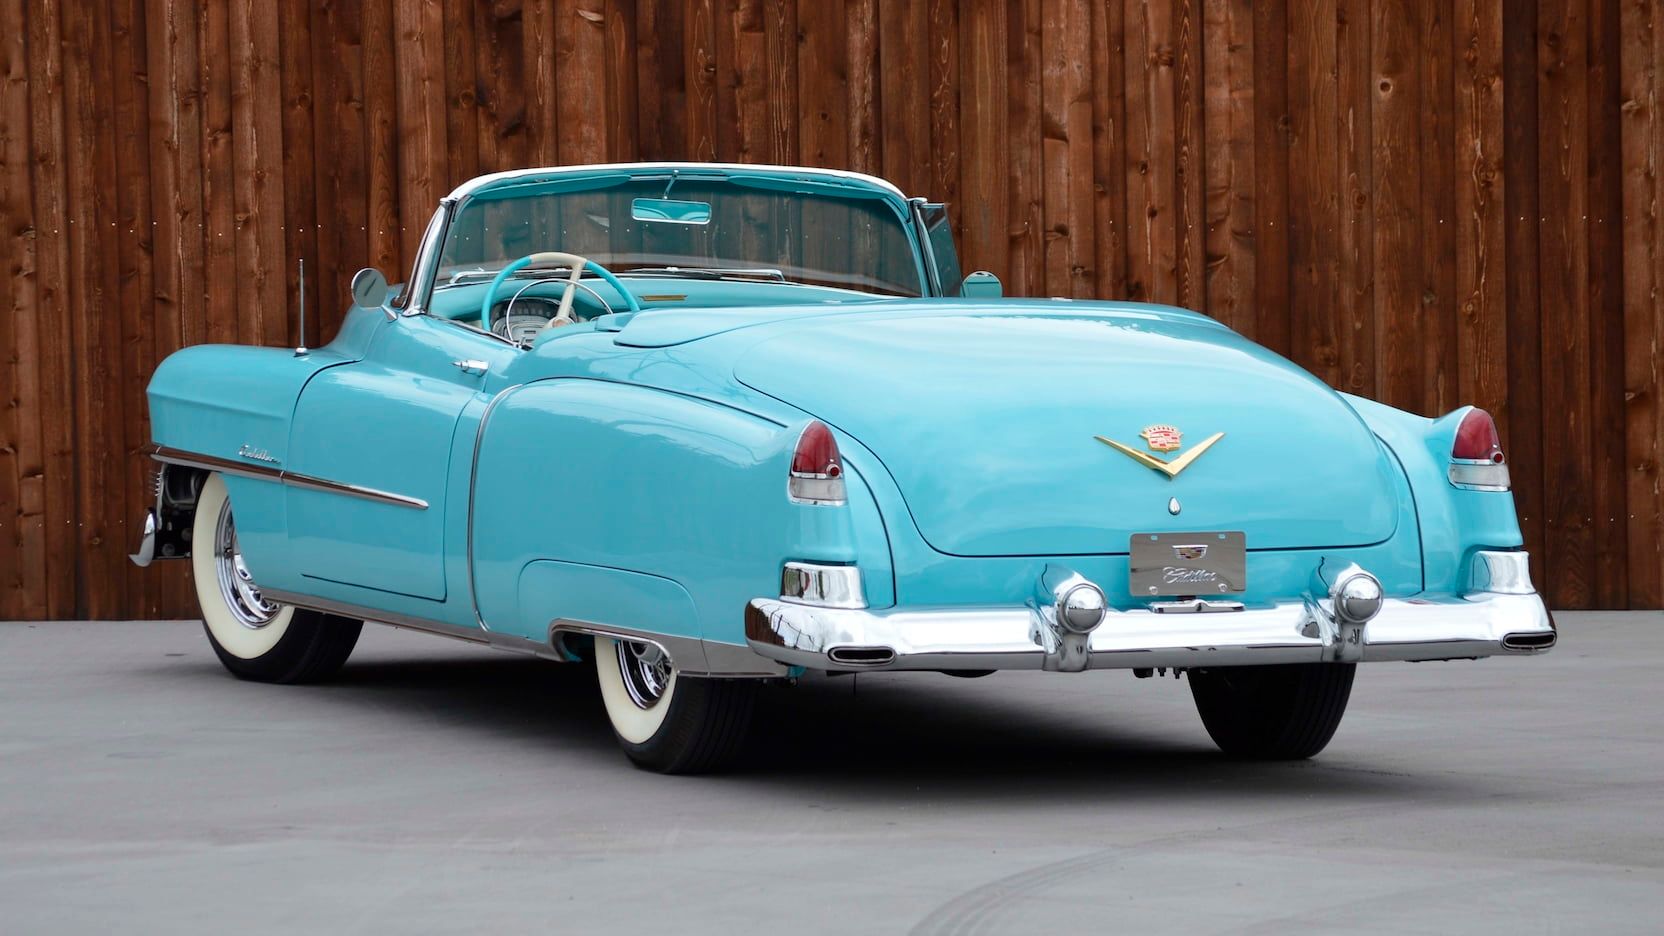 Cadillac Eldorado from 1954, light blue, rear